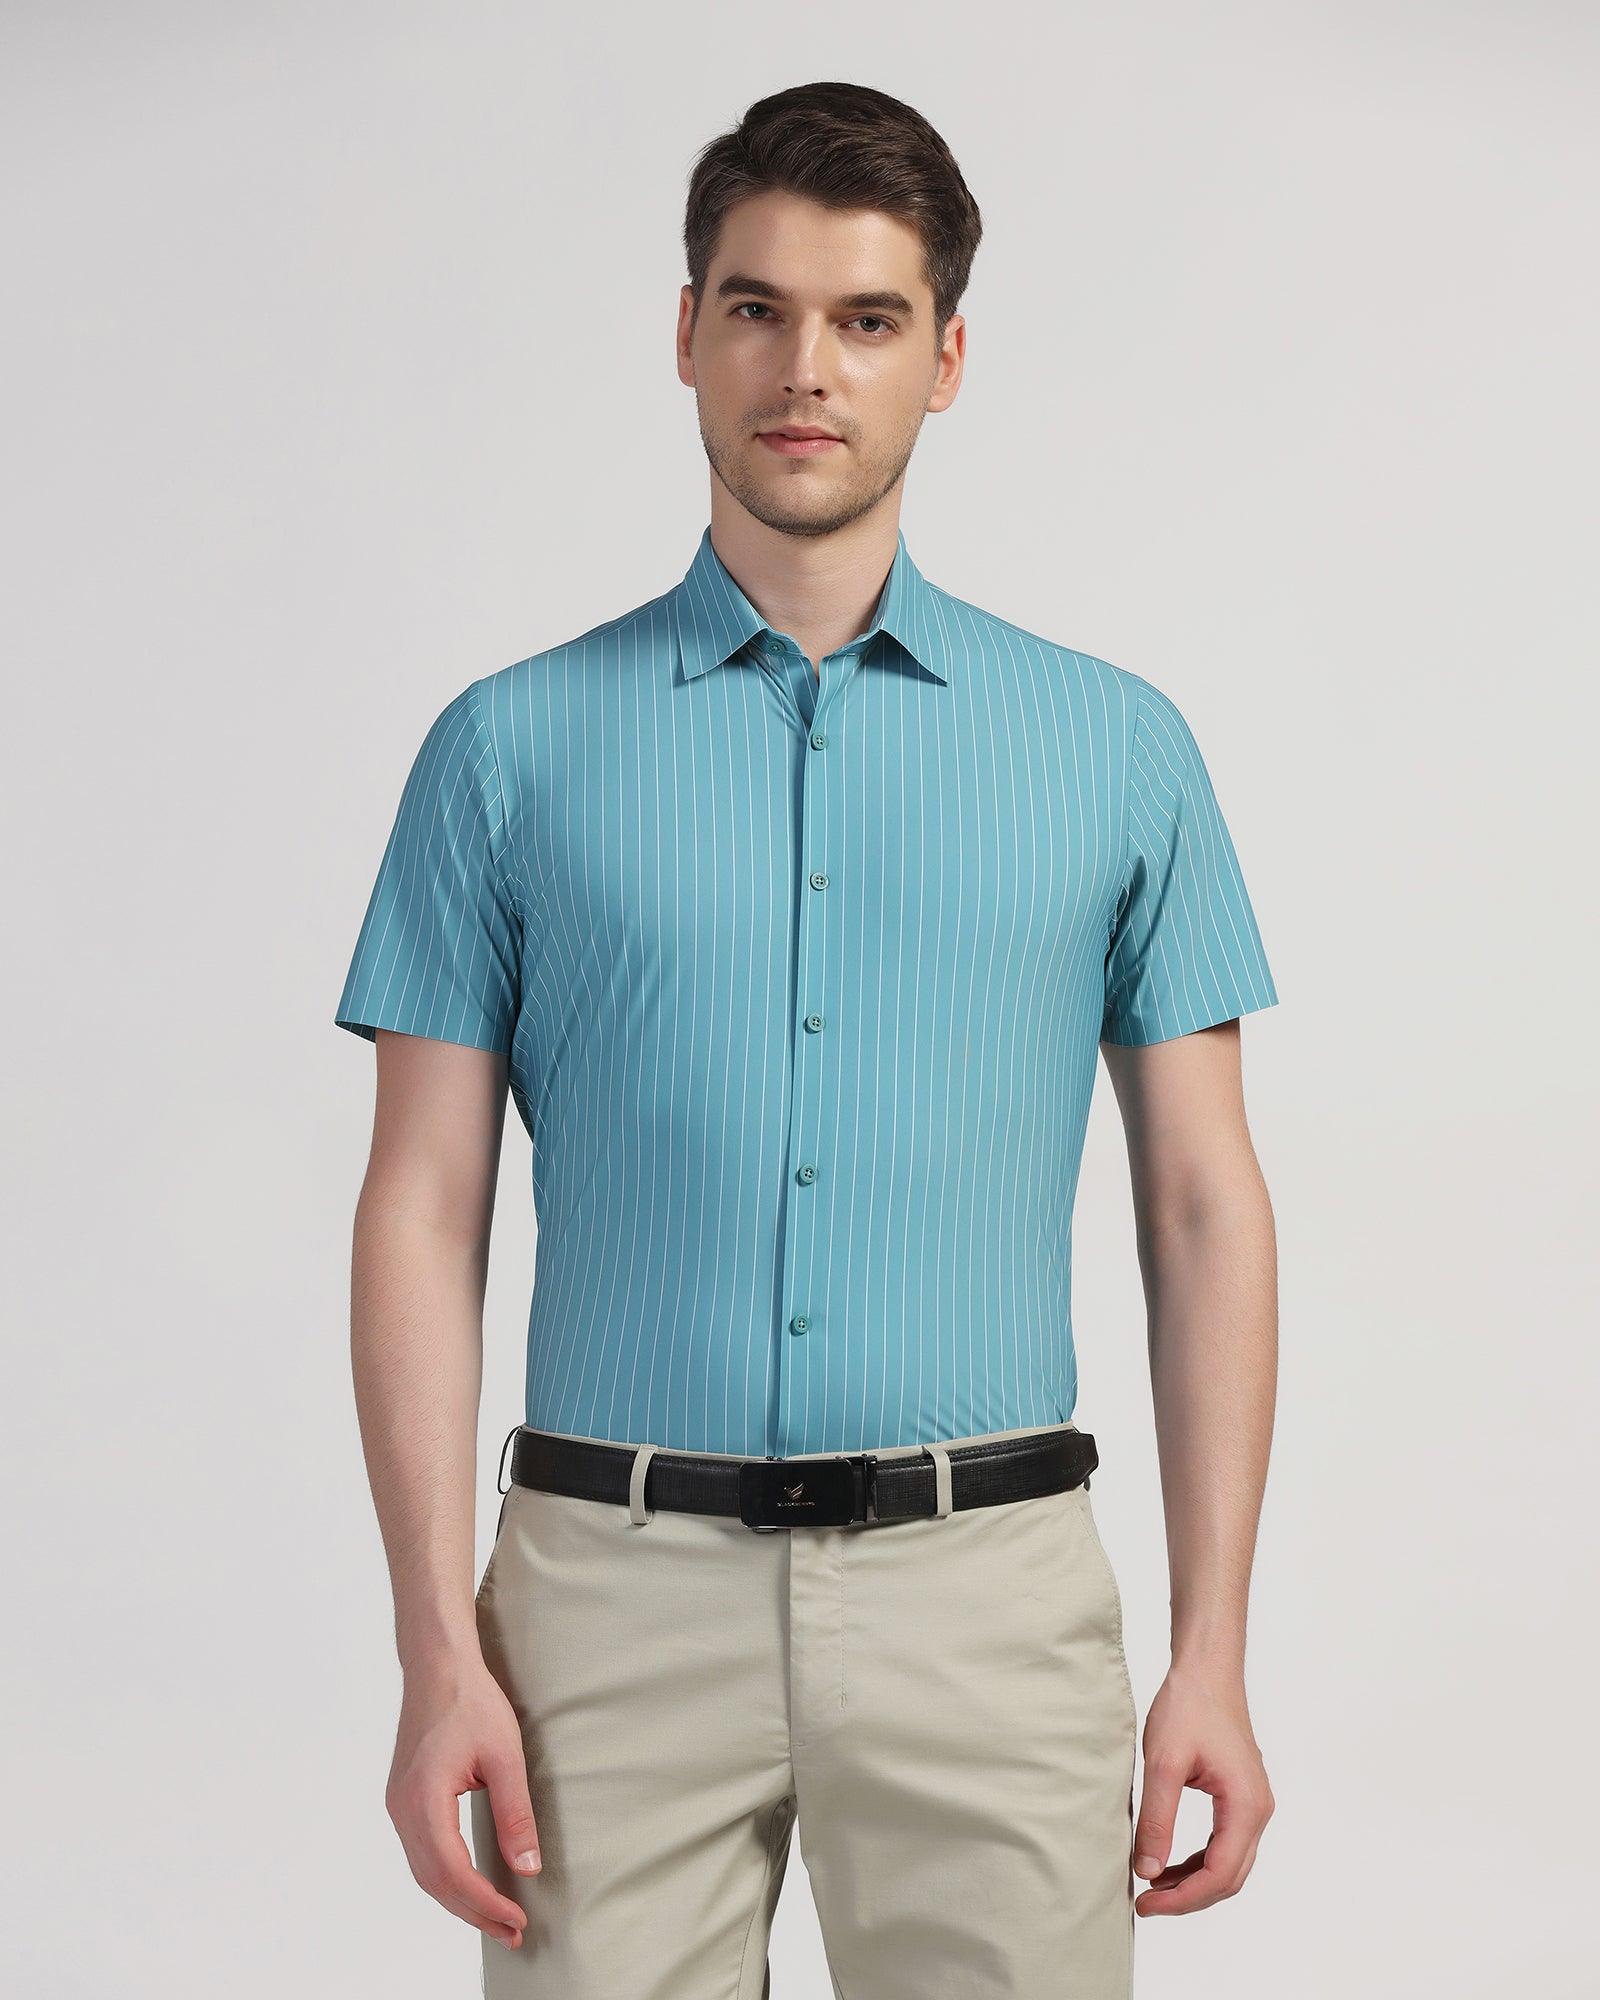 TechPro Formal Half Sleeve Green Stripe Shirt - Dickins